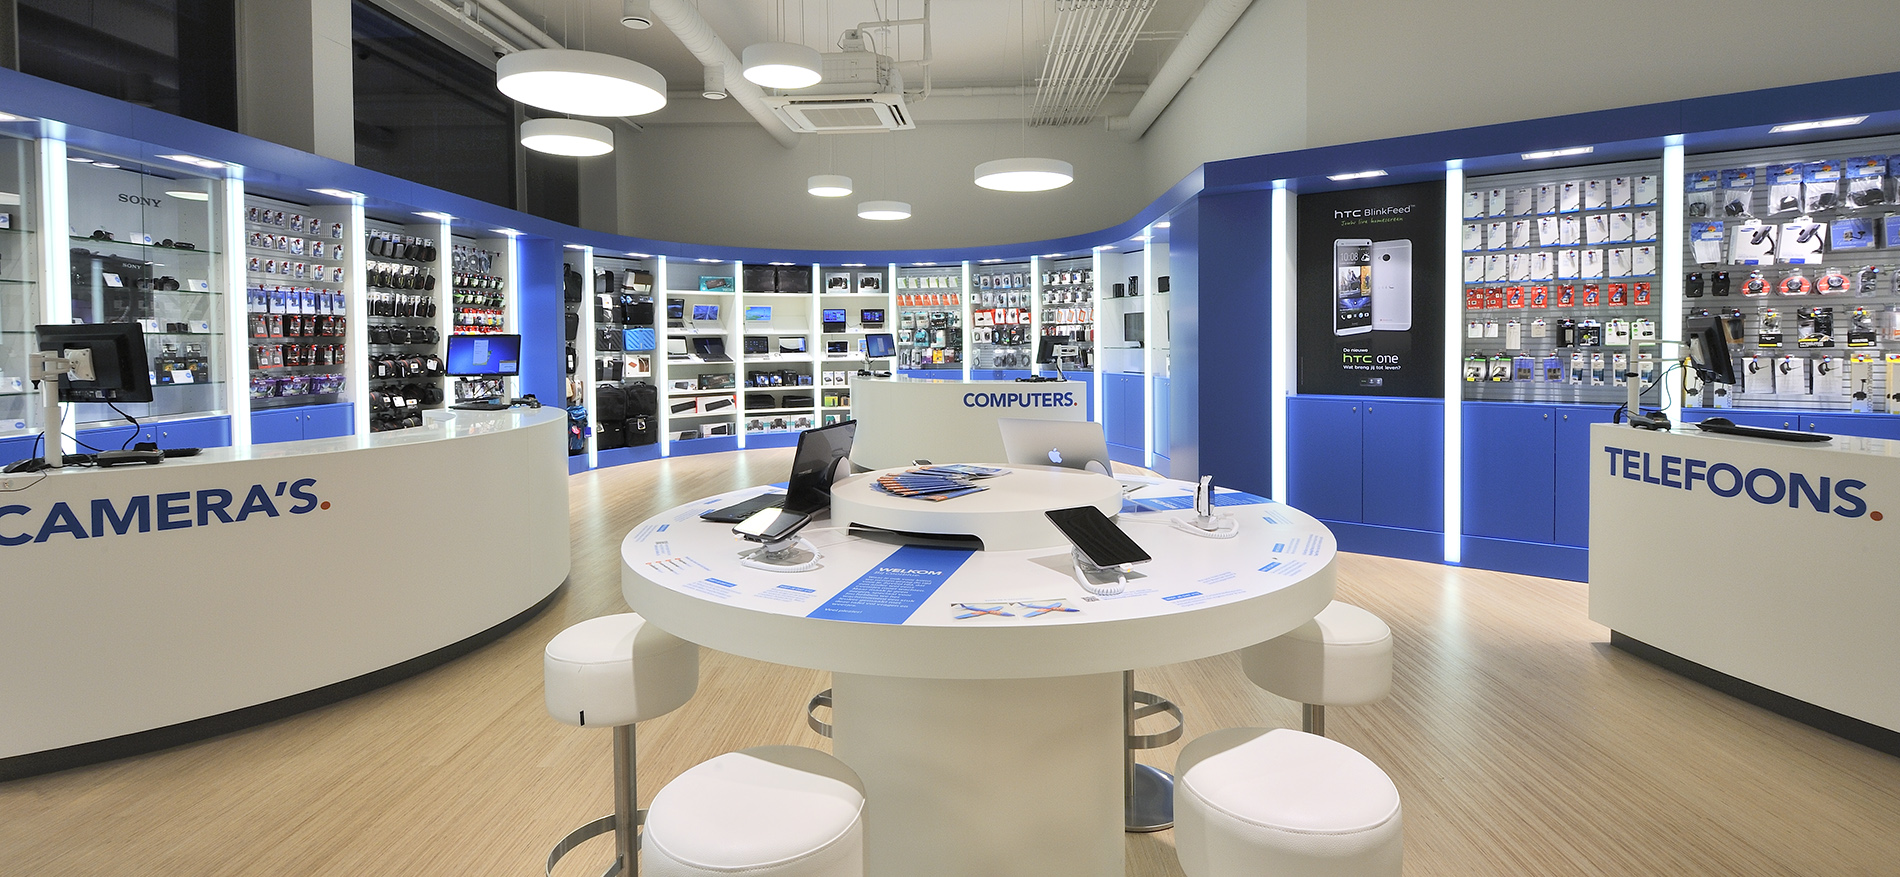 Interior Coolblue Electronics Rotterdam - 